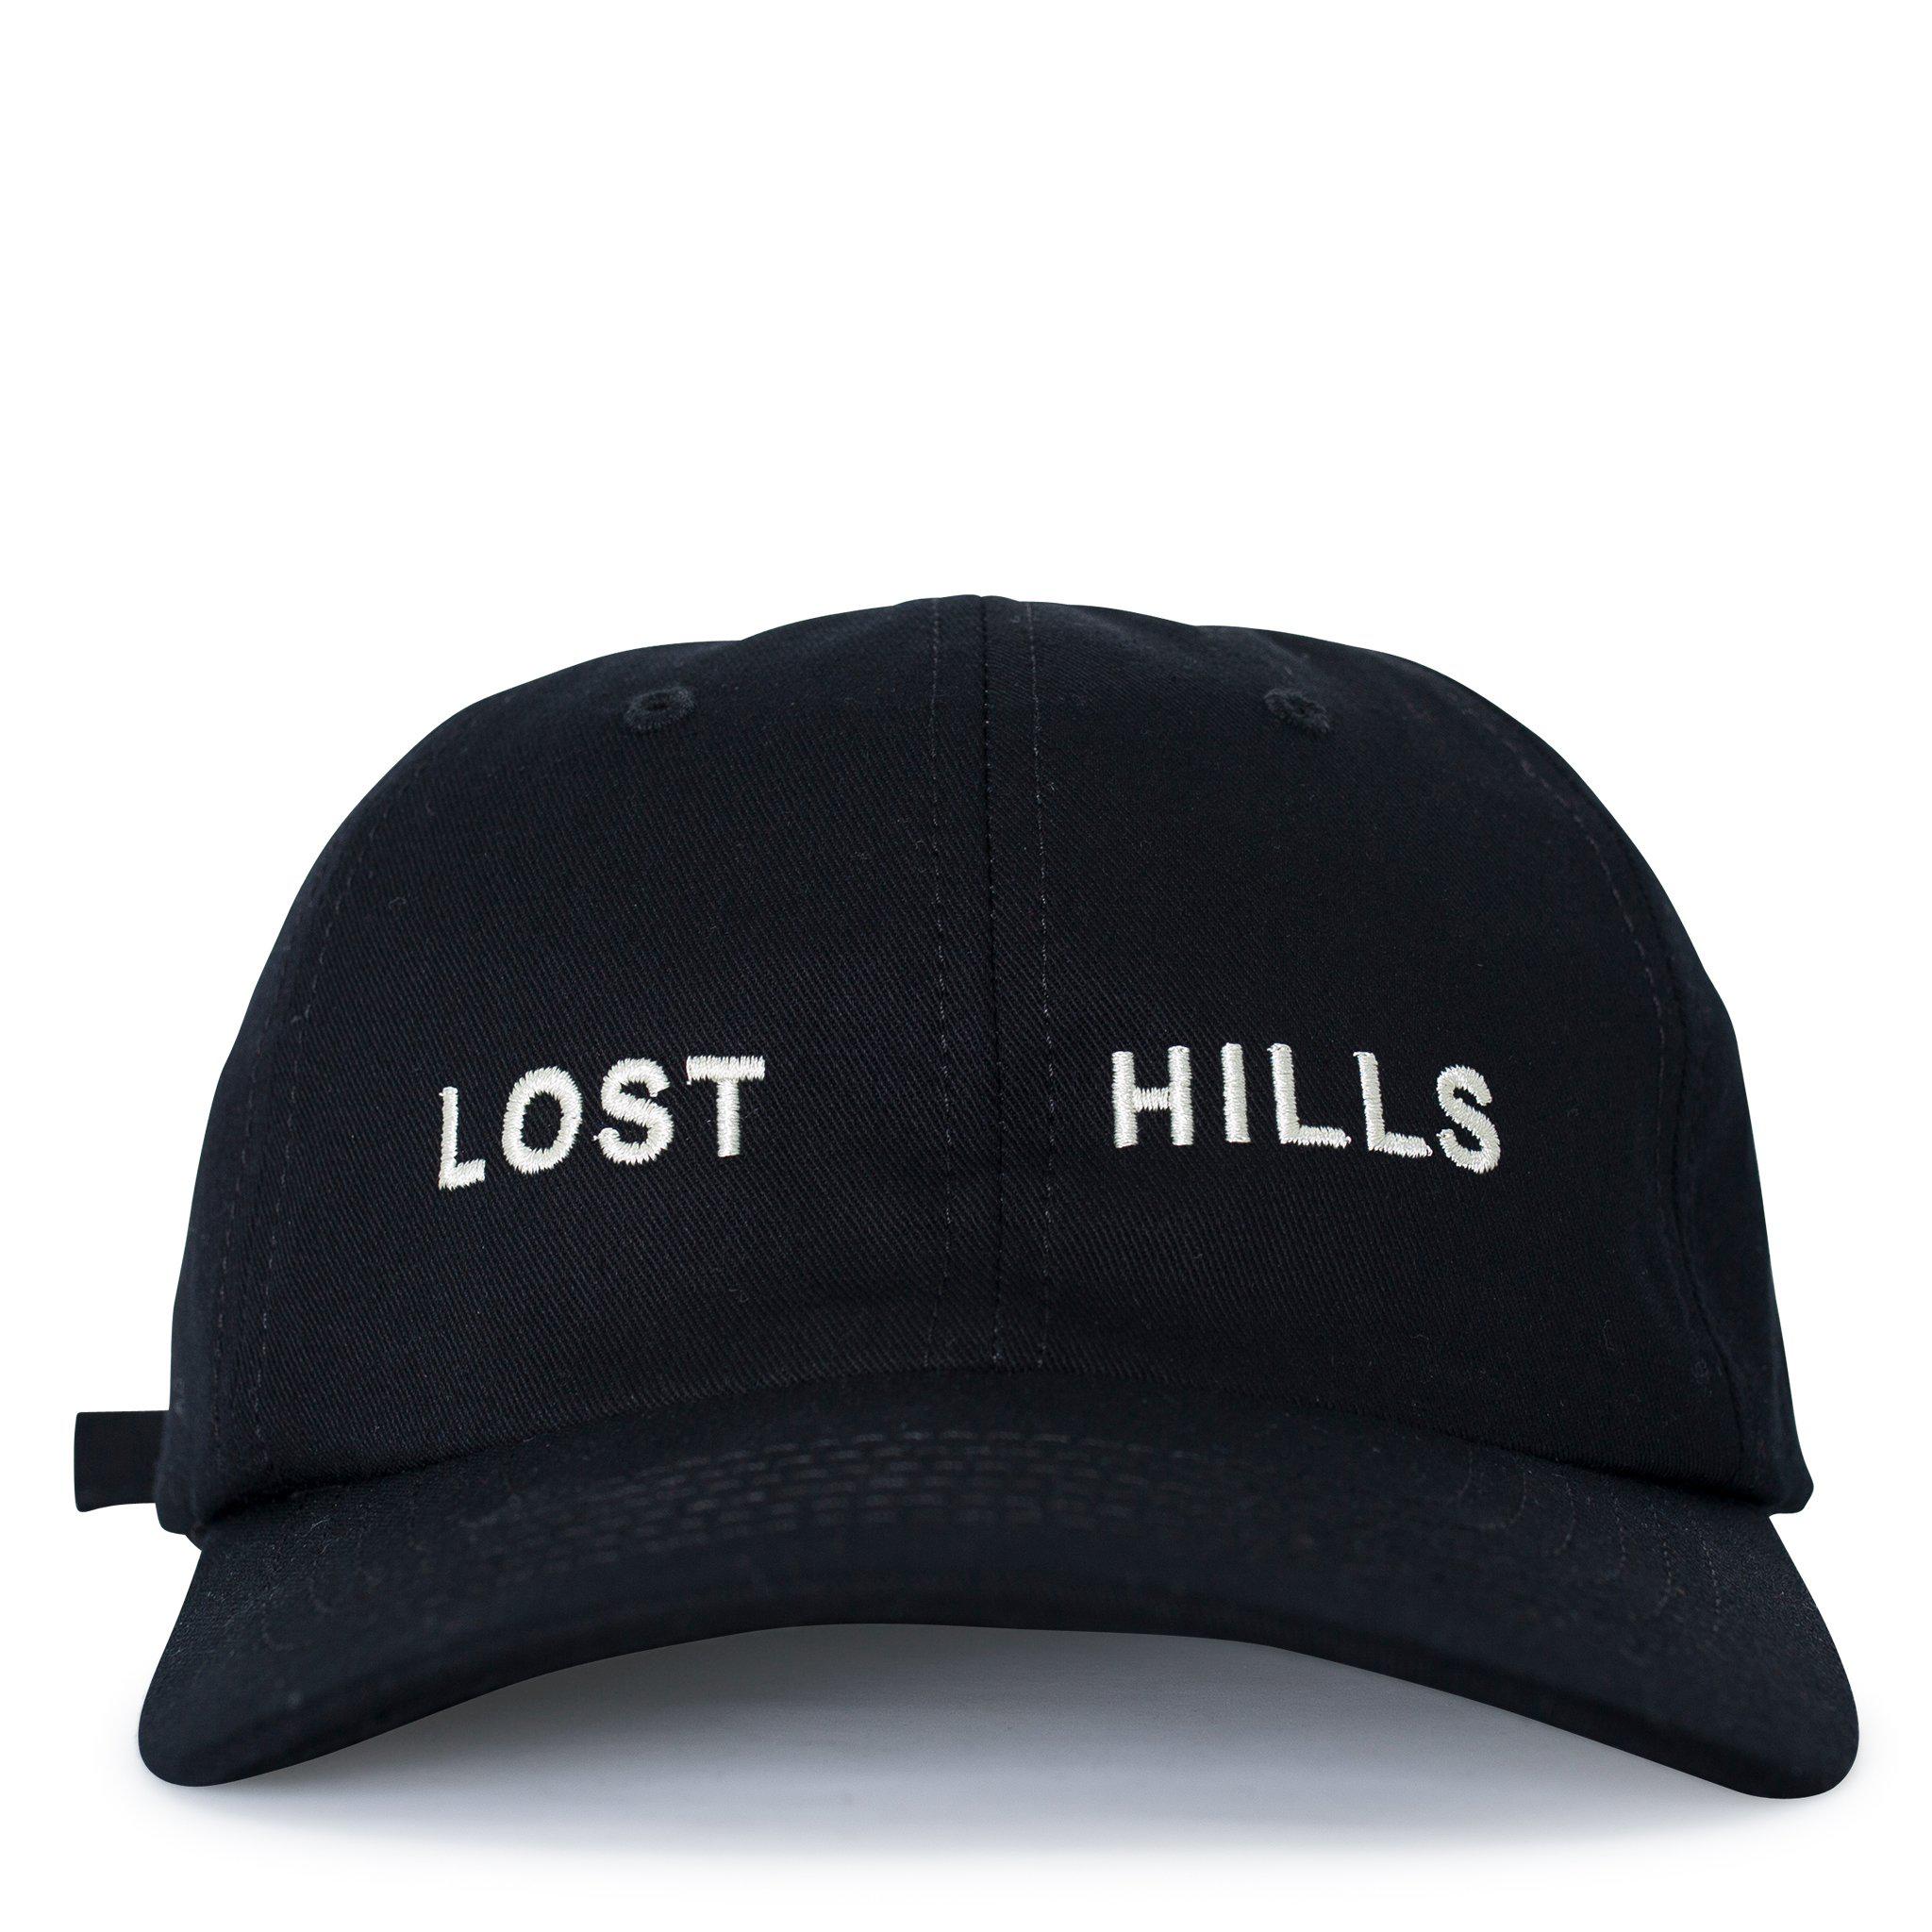 Yeezy Cotton 'lost Hills' Dad Hat in Black for Men - Lyst